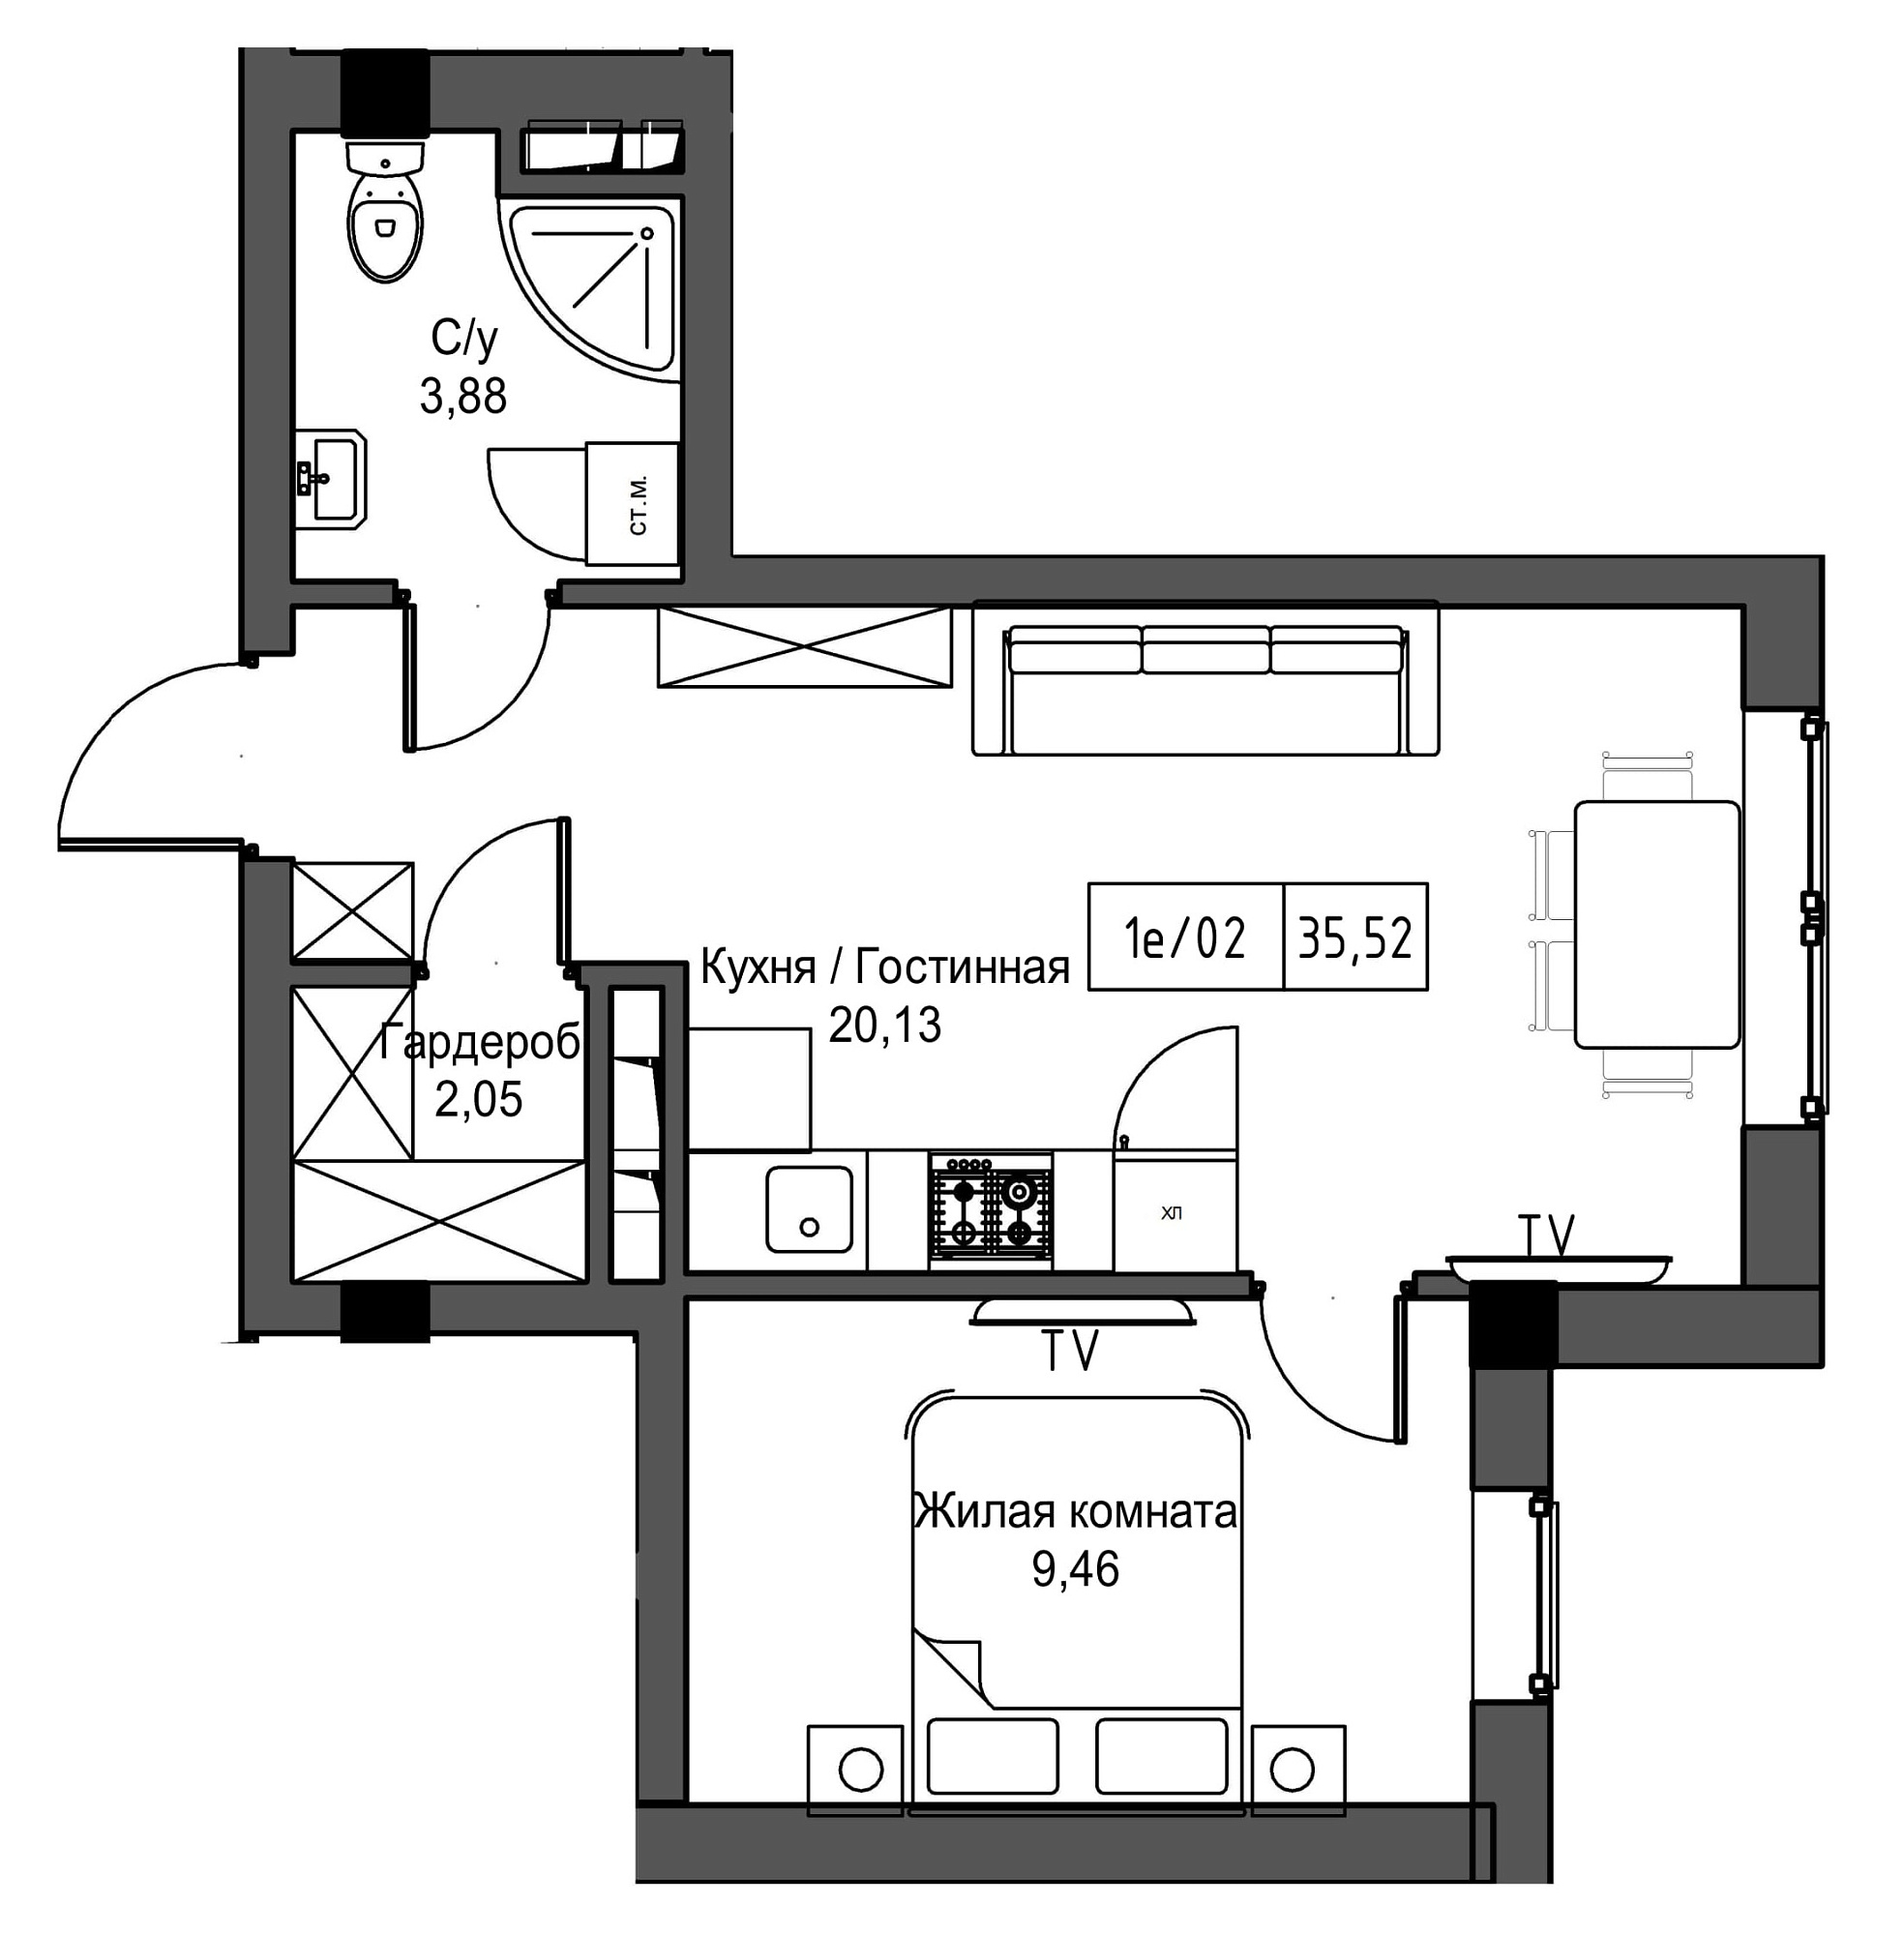 Planning 1-rm flats area 35.52m2, UM-002-09/0083.